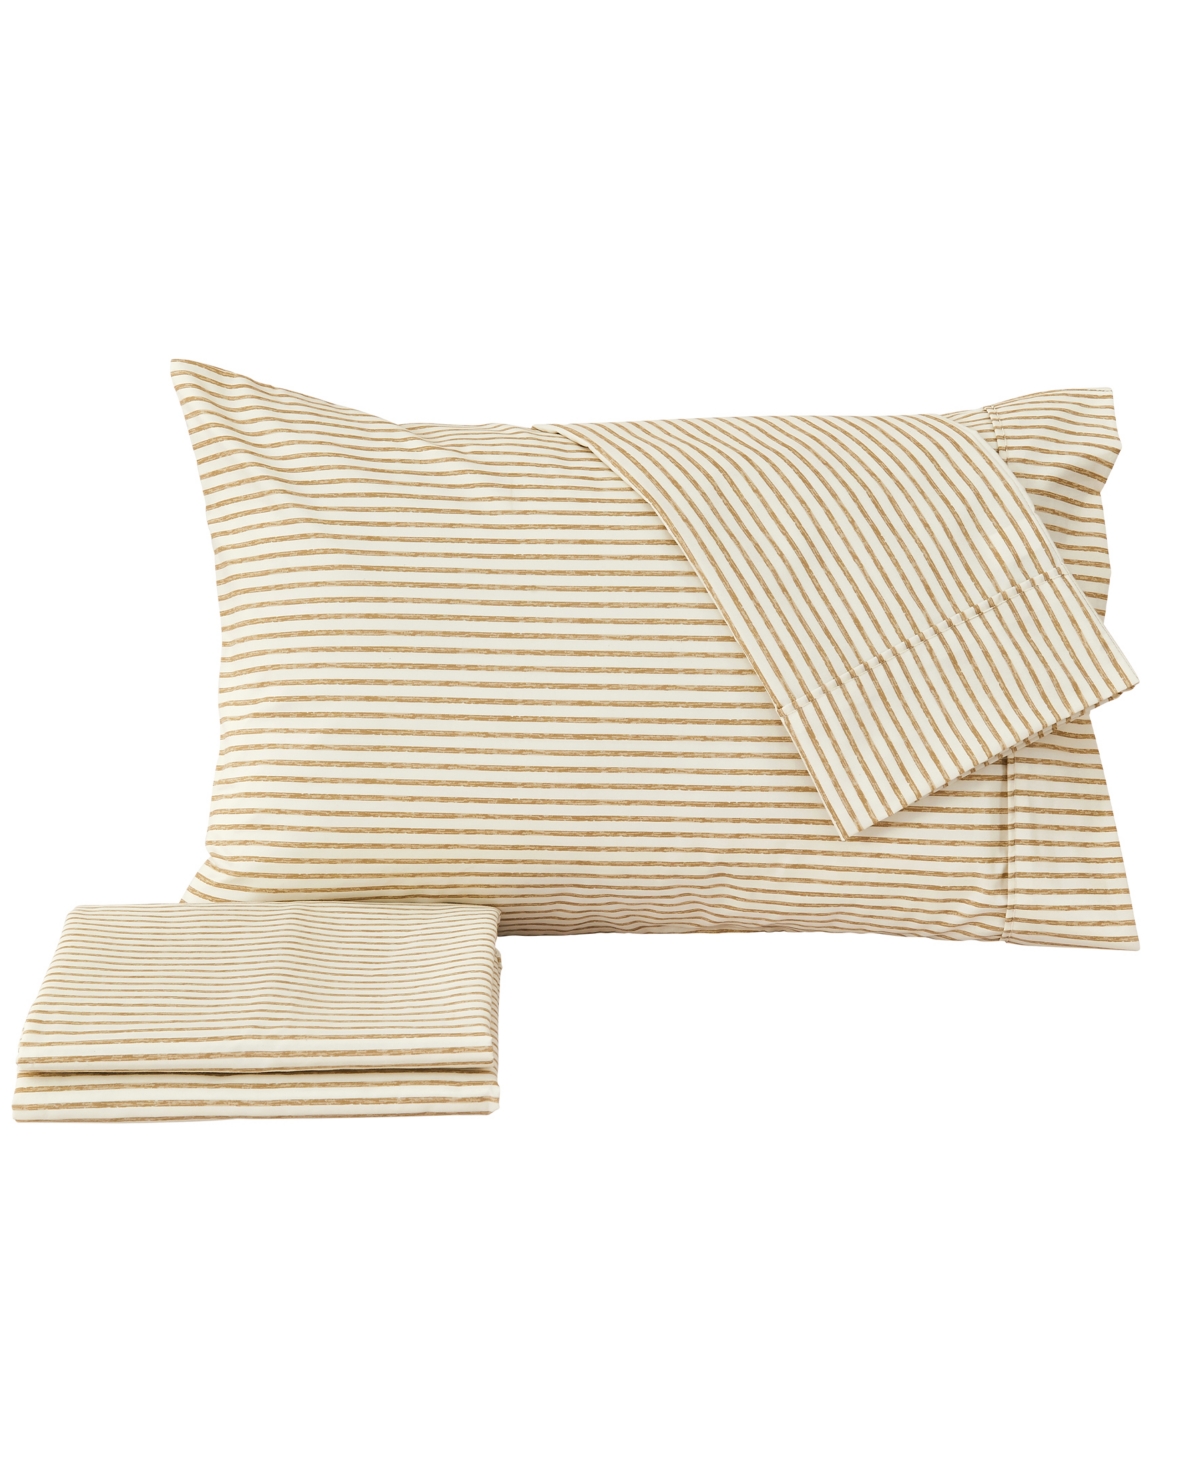 Premium Comforts Striped Microfiber Crease Resistant 3 Piece Sheet Set, Twin In Stripe - Light Taupe